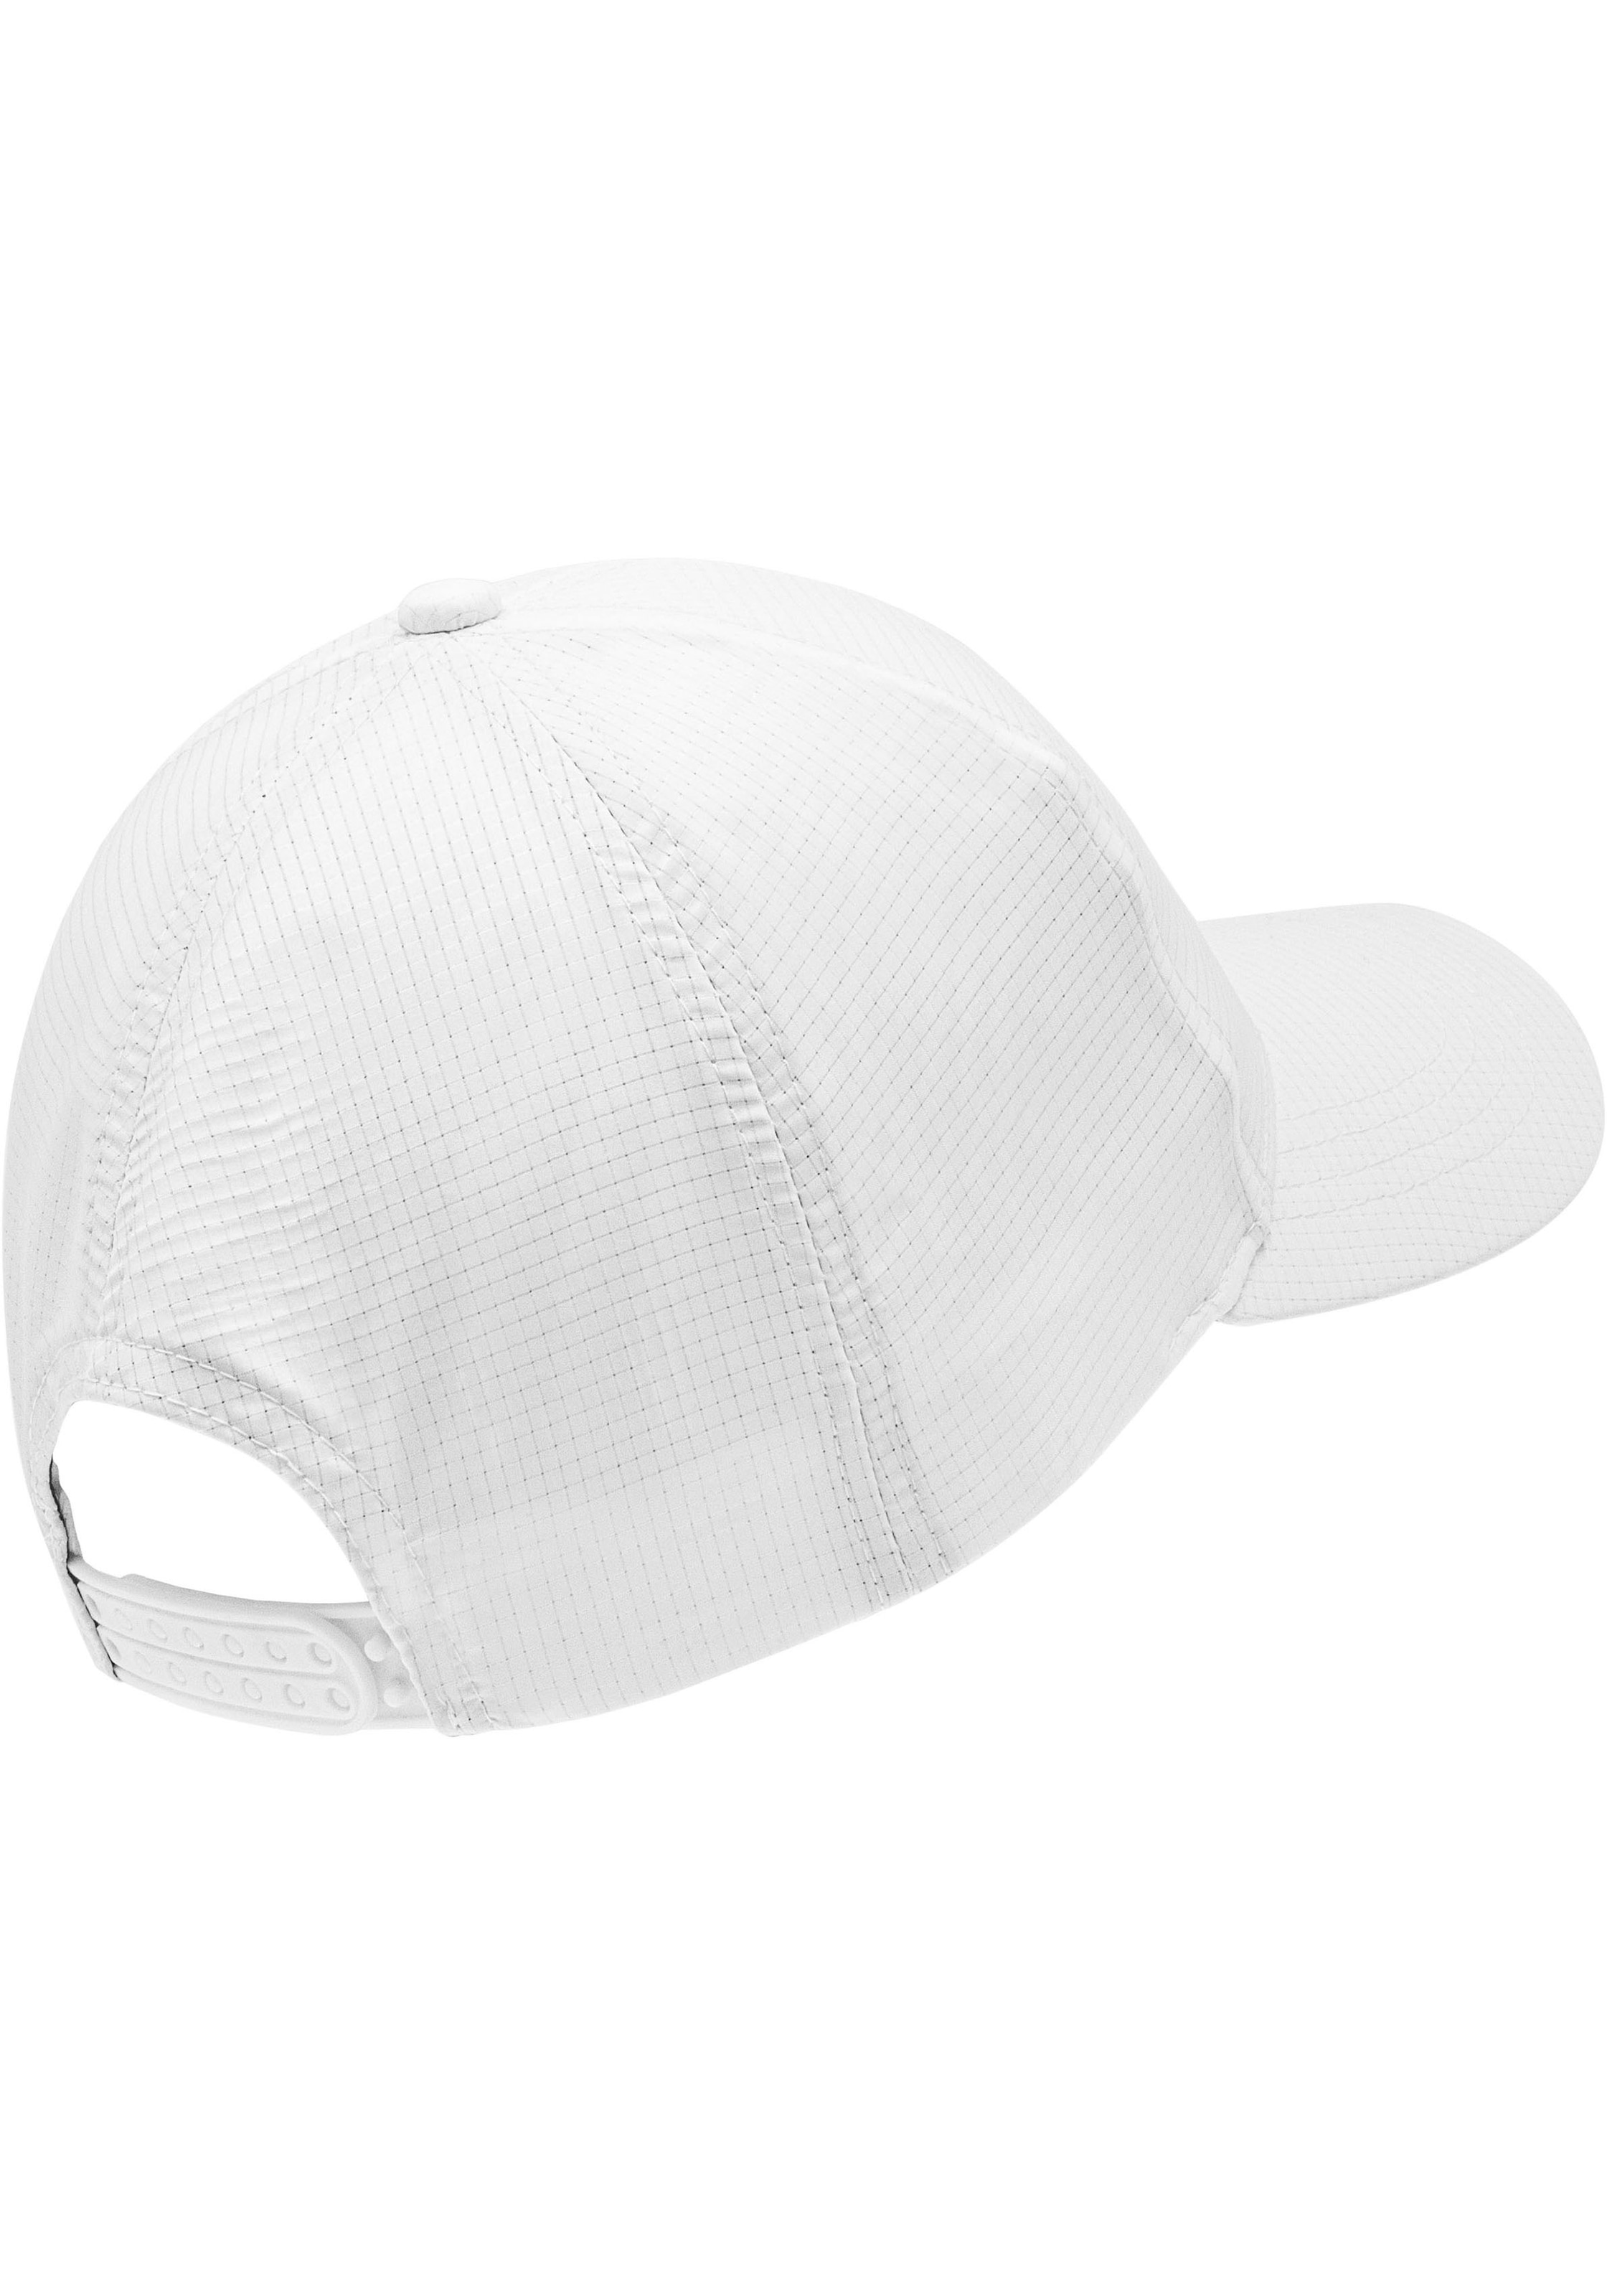 chillouts Baseball Cap, Langley Hat auf Raten | BAUR | Baseball Caps